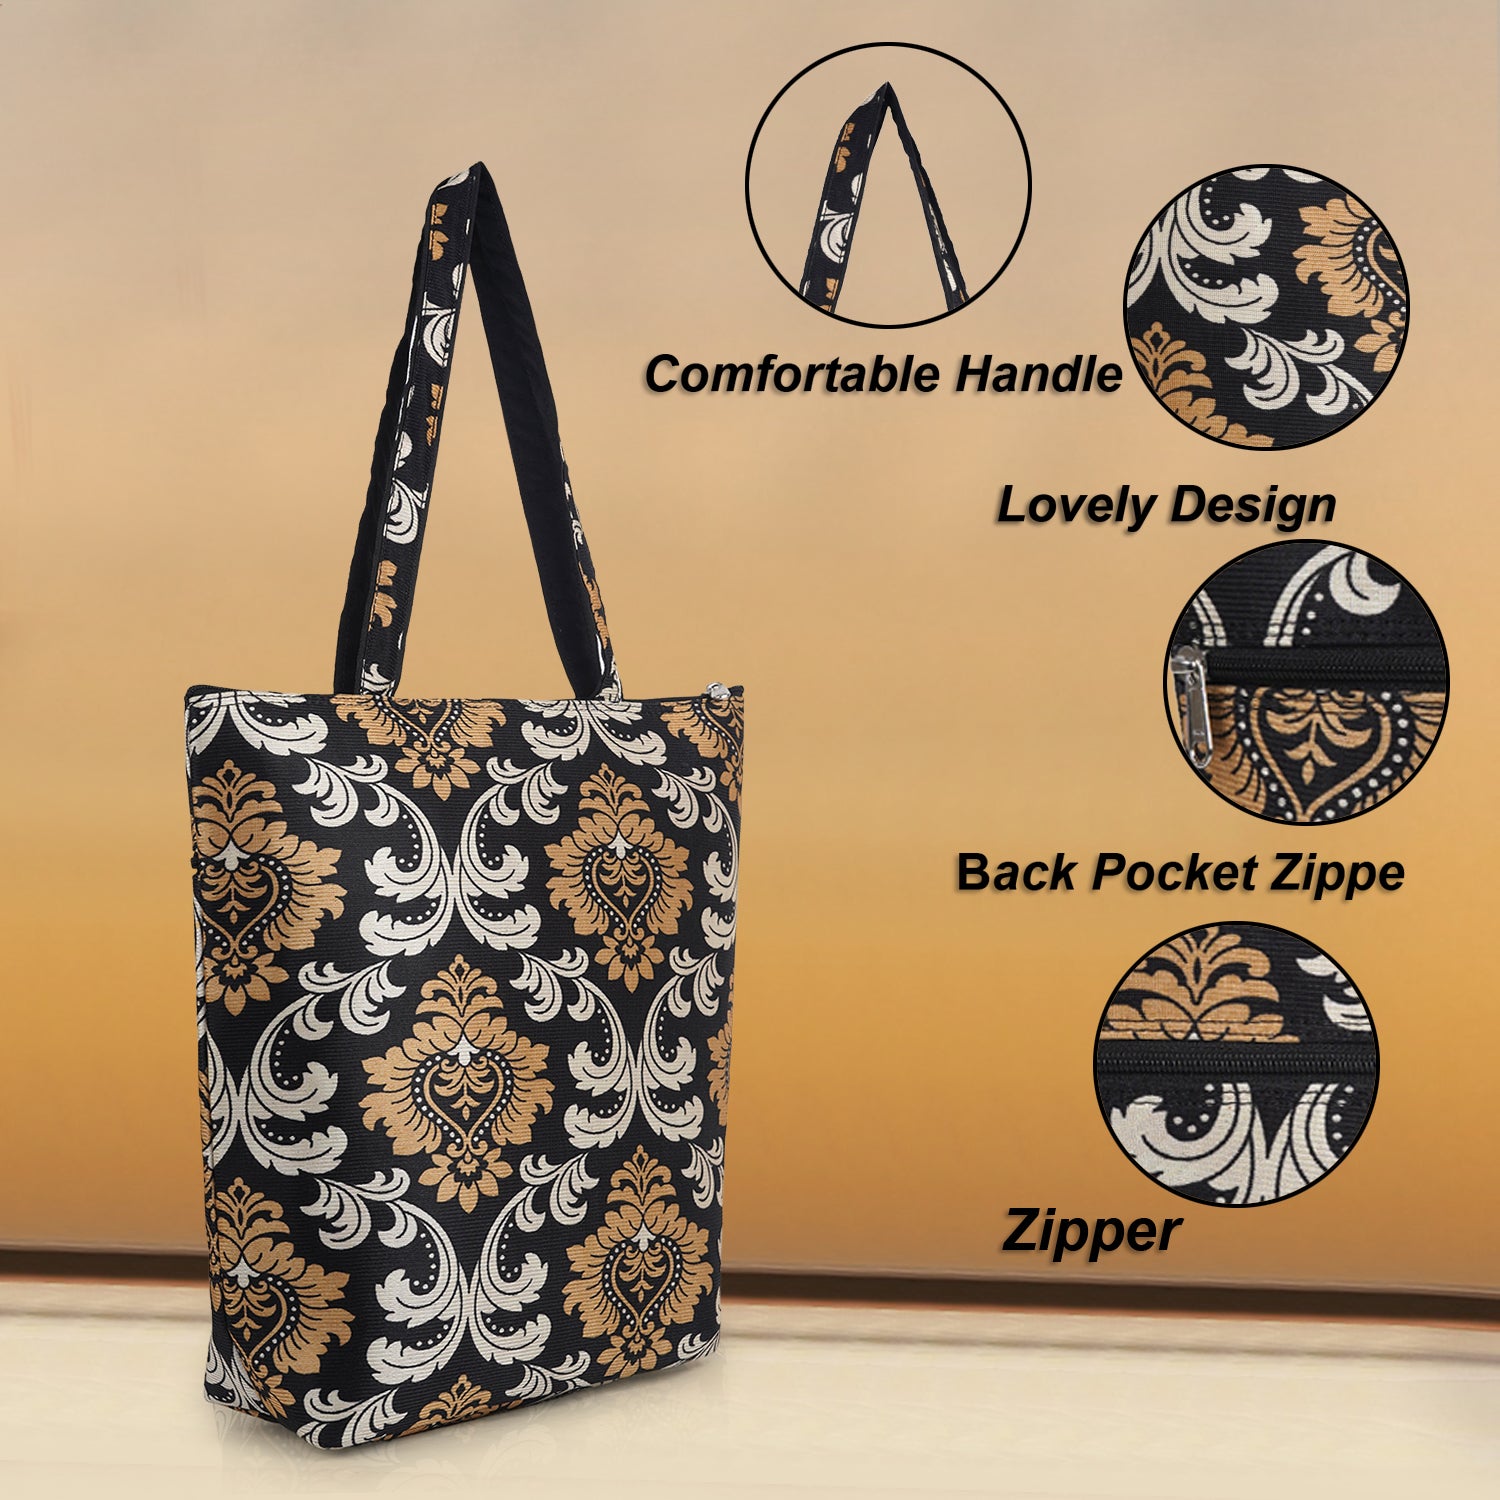 CIMONI Fabric Stylish Top Handle Handheld Shoulder Unique Design Daytrip Shopping Handbag For Women